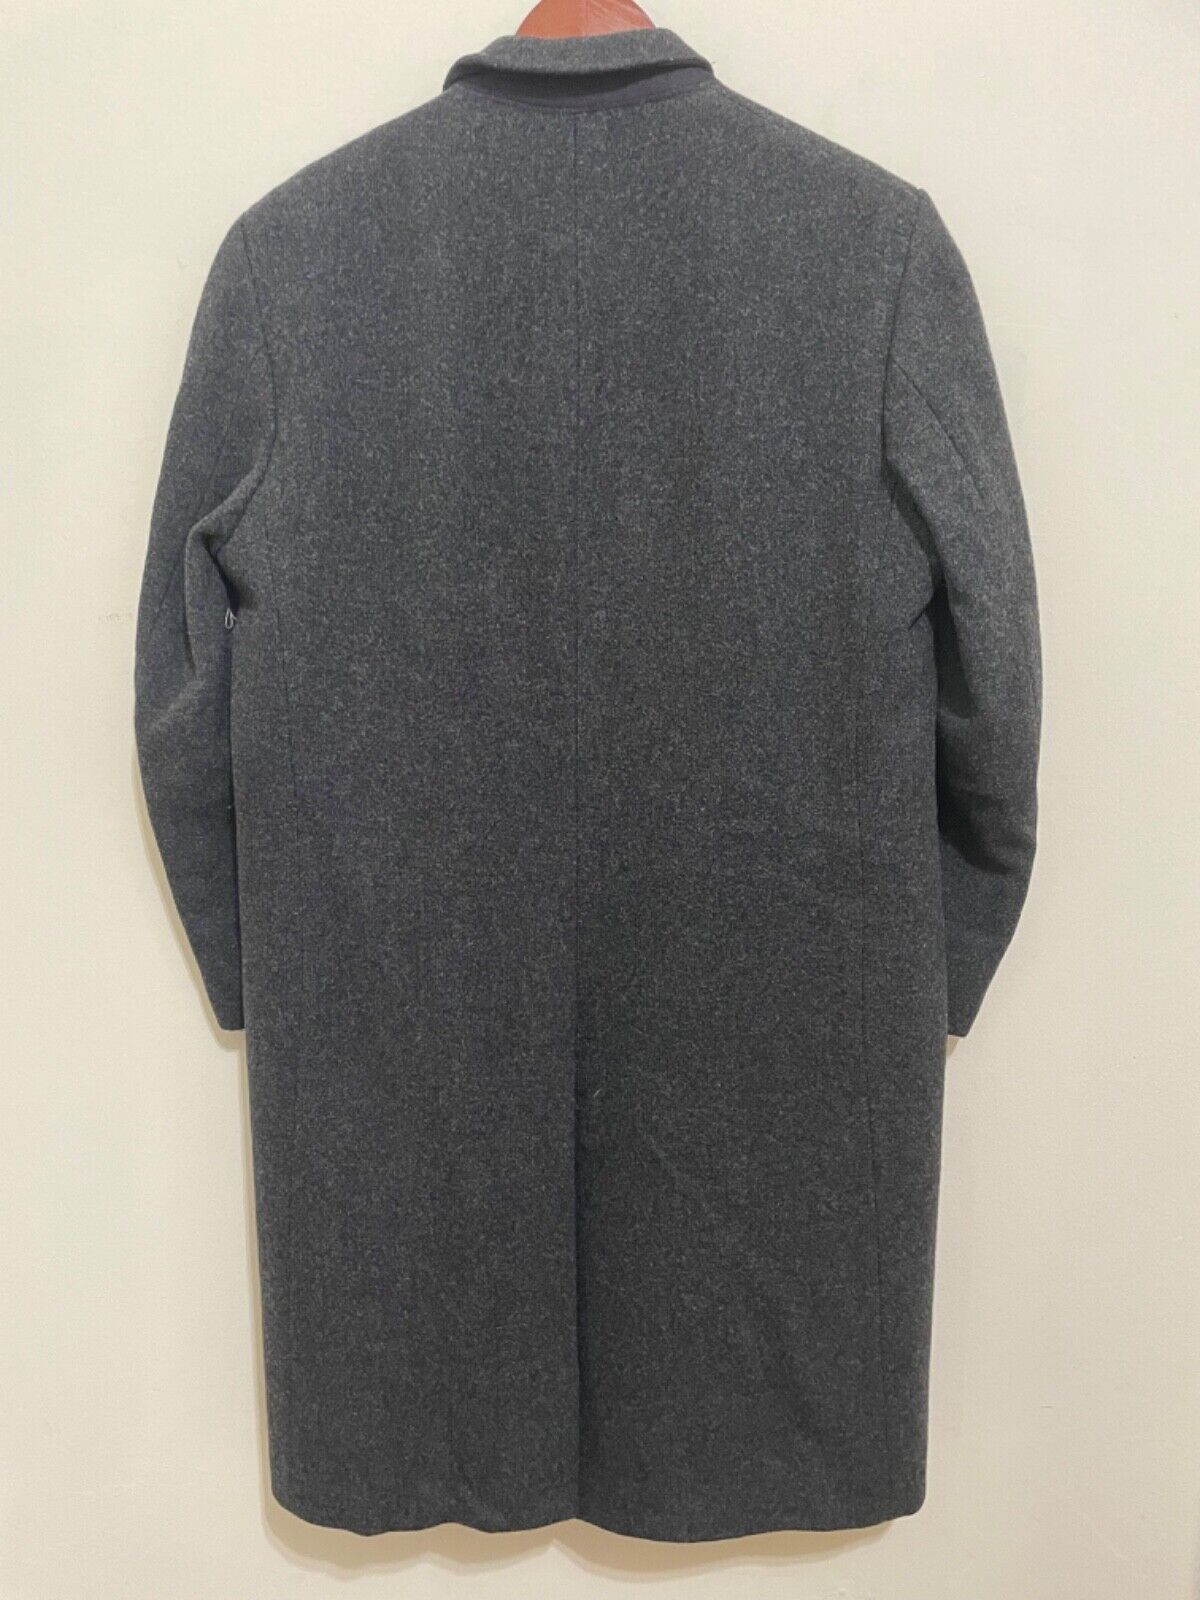 Men's Vintage English Fabric Coat, circa 1985 #sh… - image 2